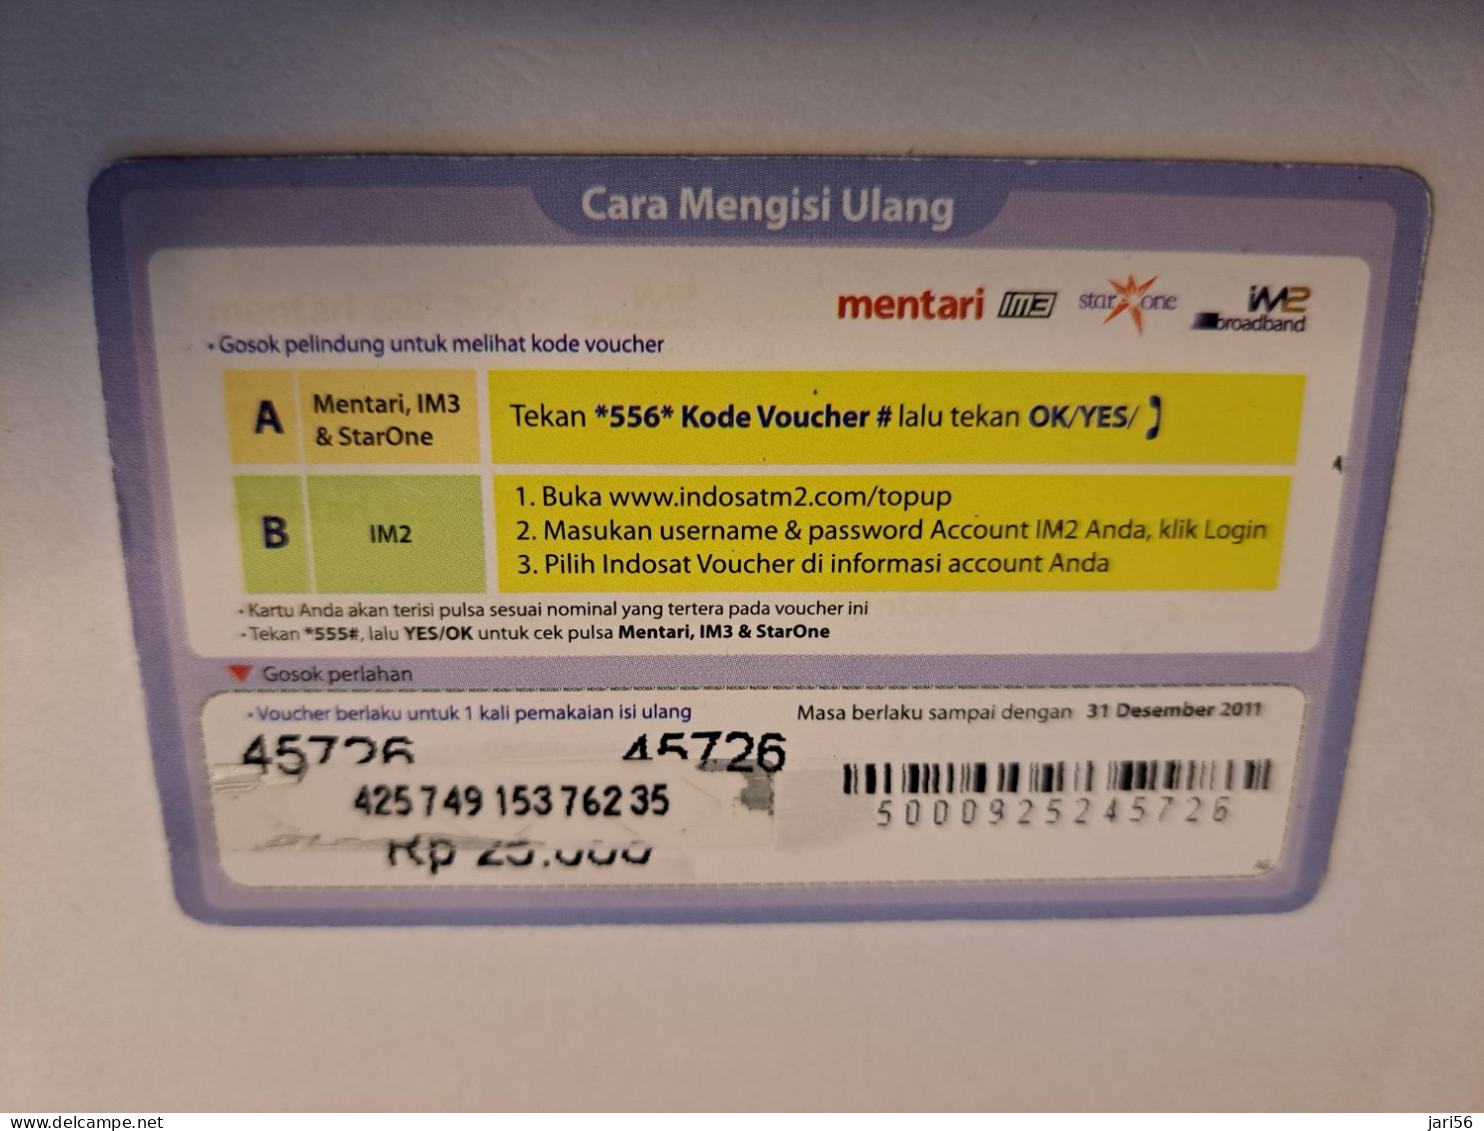 INDONESIA / PREPAID/   RP 25.000 /PW HARRY MOELYANTO            Fine Used Card  **16088** - Indonesia